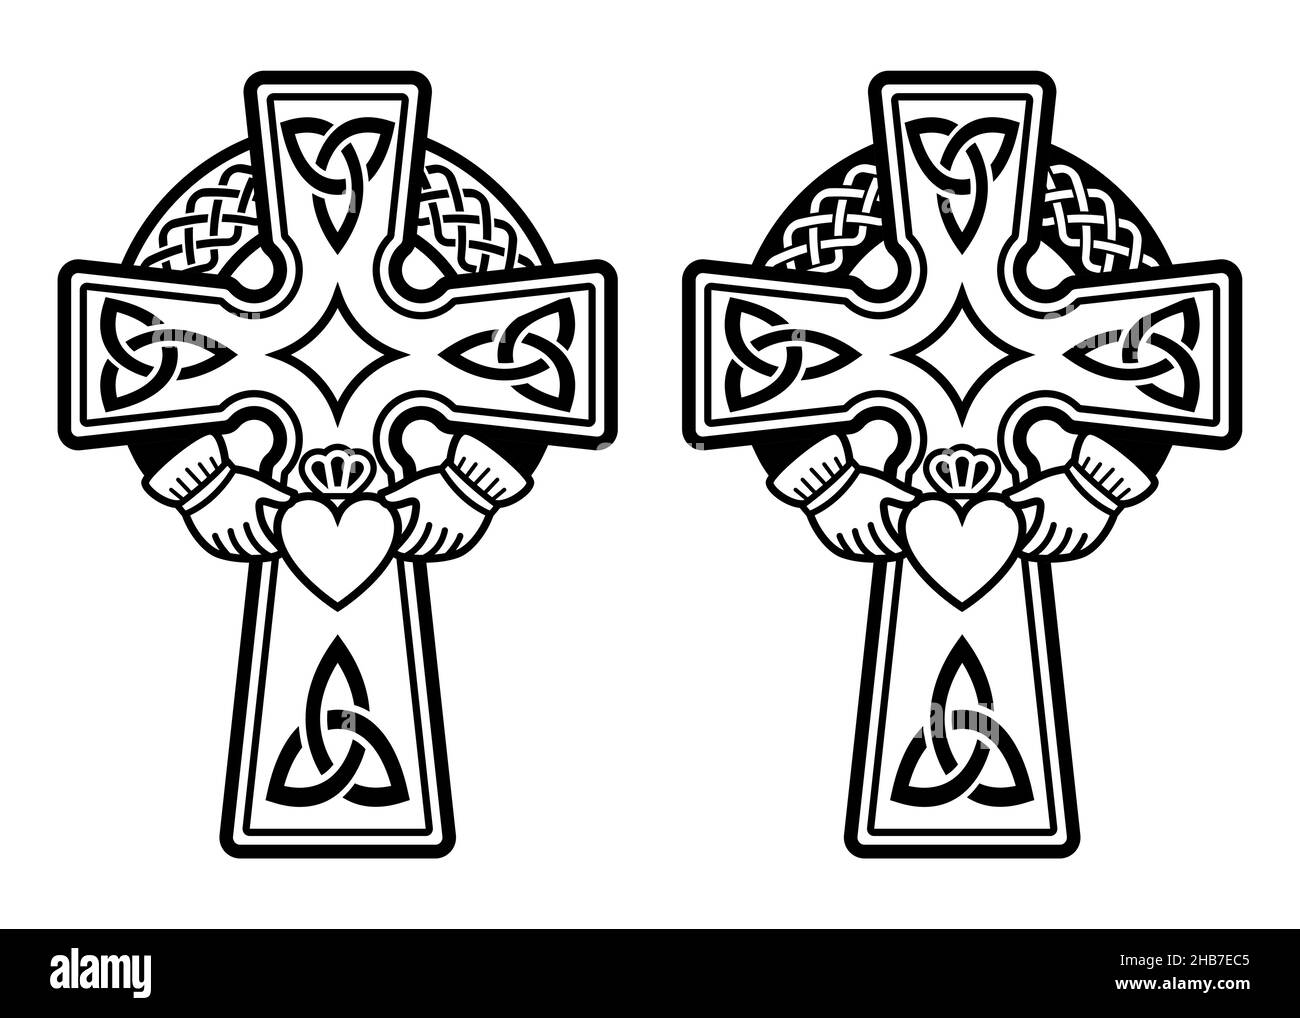 celtic tattoos | Celtic Cross And Claddagh Tattoo Pictures | Cross tattoo  designs, Cross tattoo for men, Celtic cross tattoos